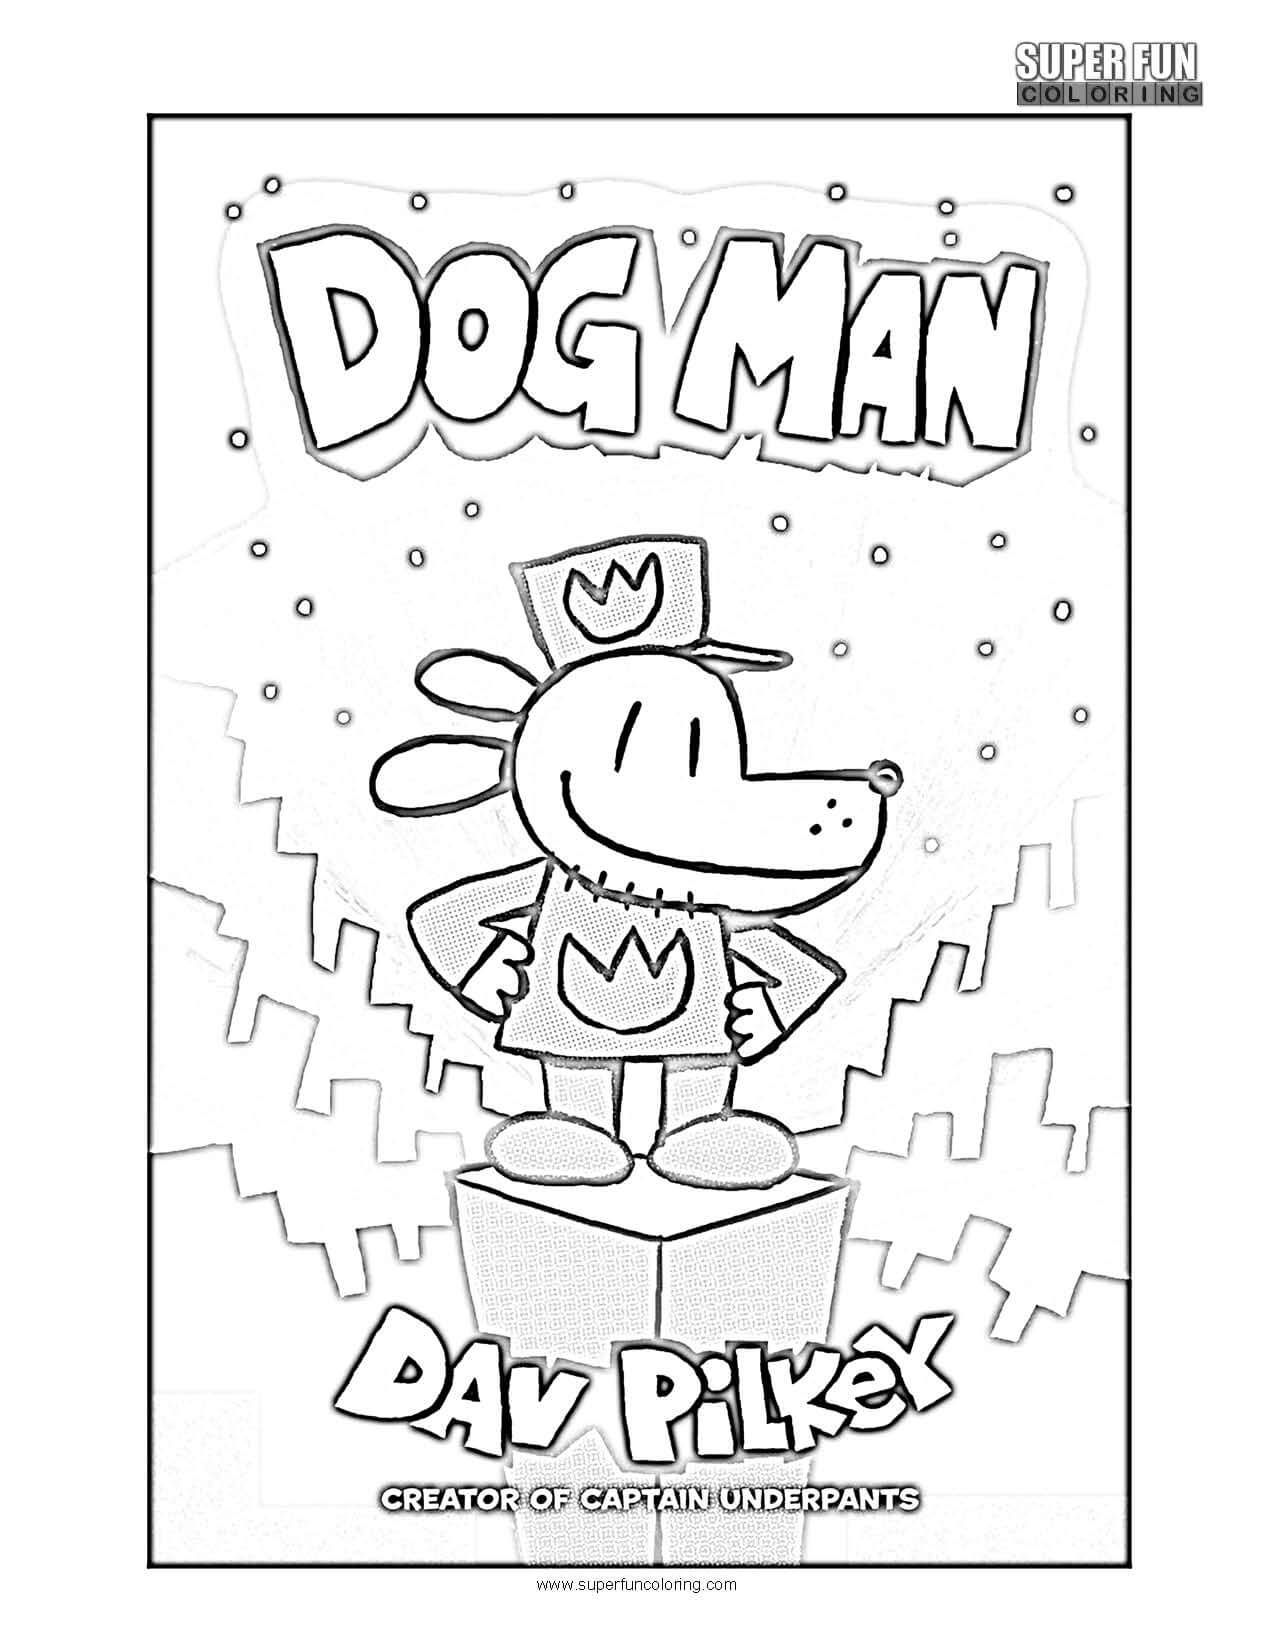 Dogman Coloring Page - Super Fun Coloring